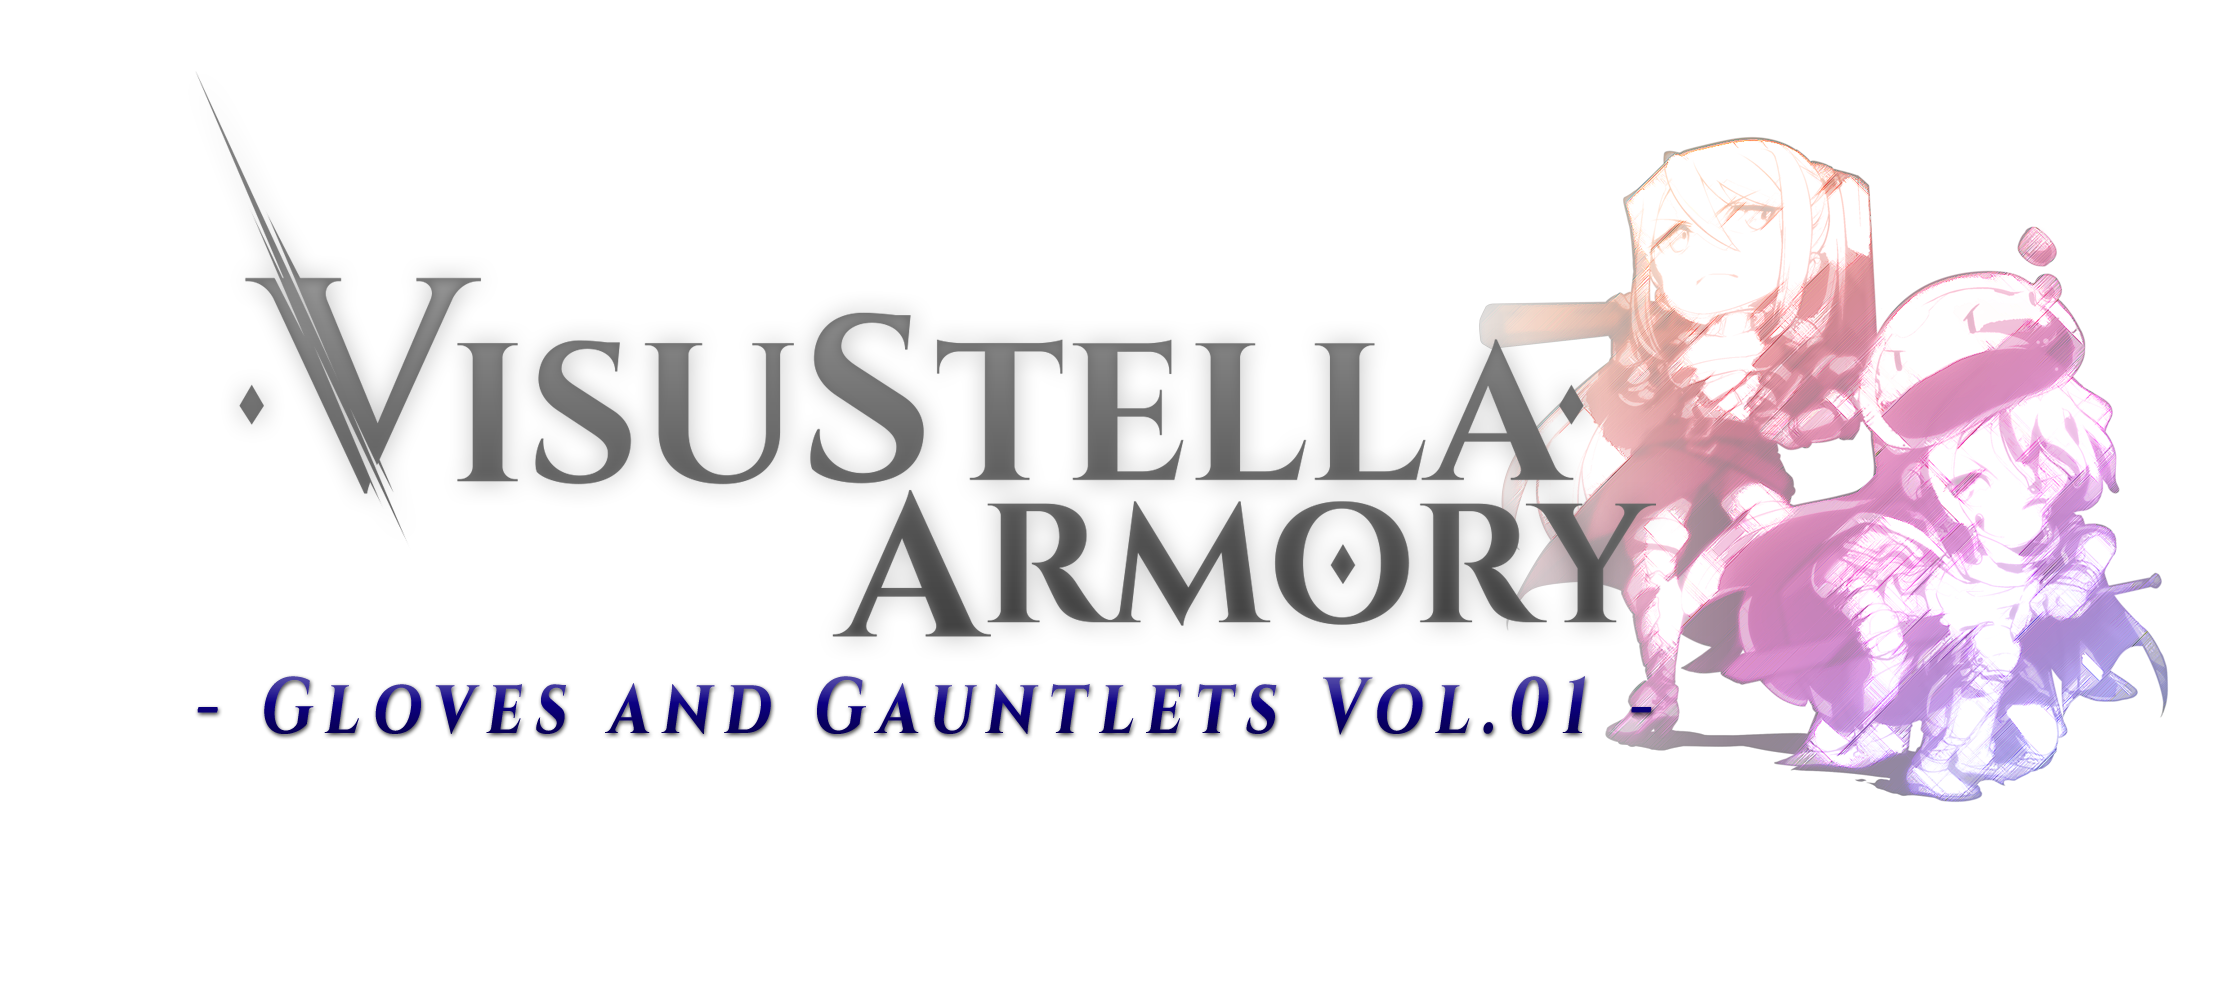 VisuStella Armory: Gloves and Gauntlets Vol.01